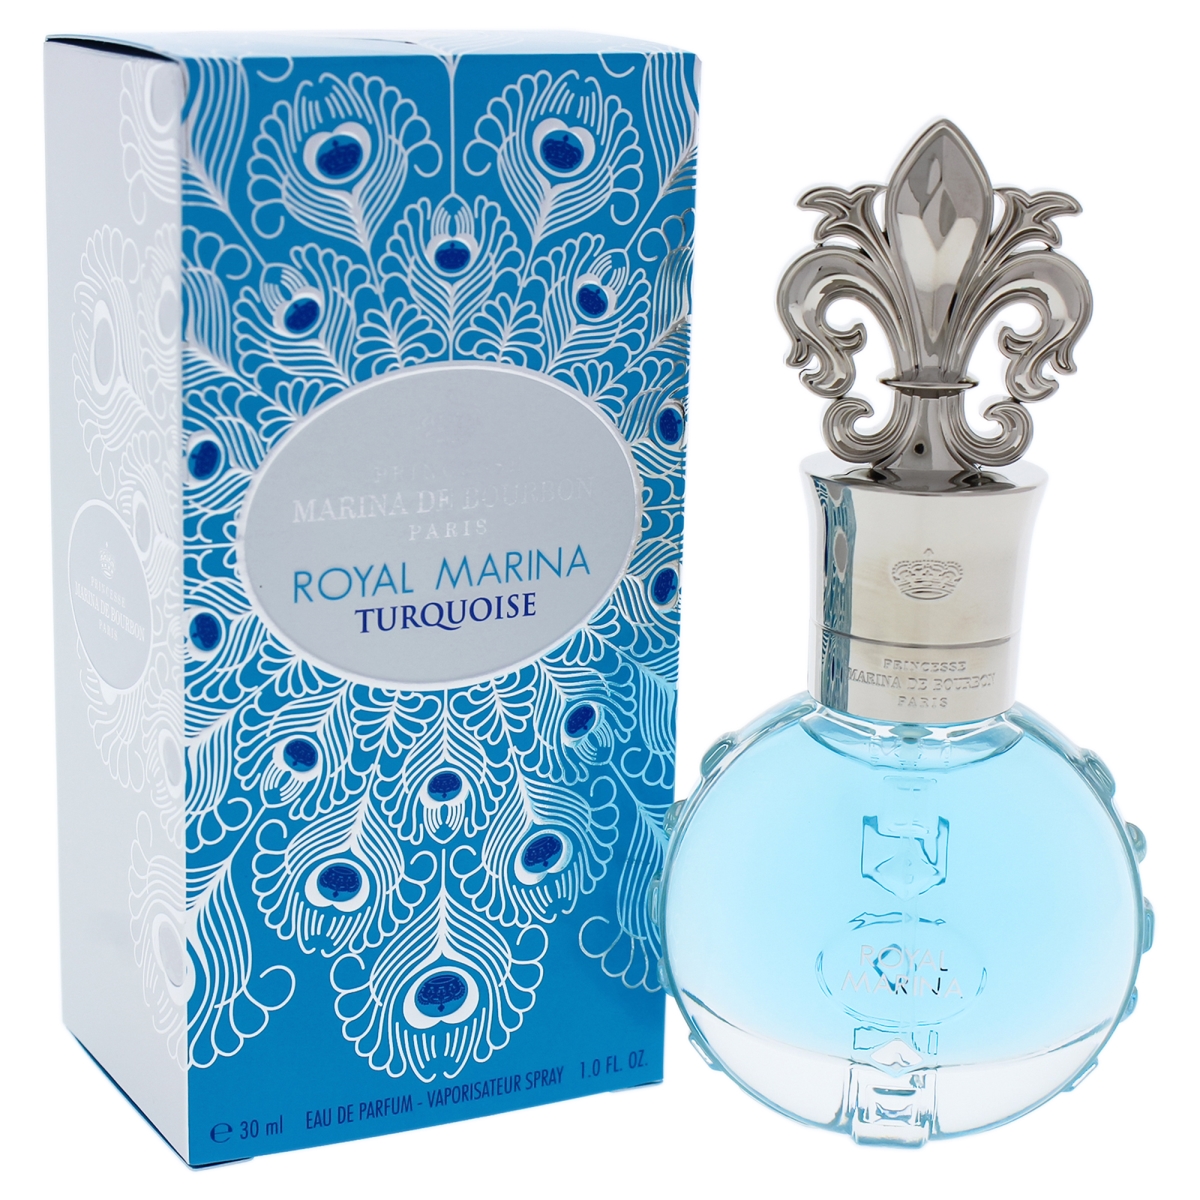 Princesse Marina De Bourbon I0085437 Royal Marina Turquoise Edp Spray For Women - 1 Oz